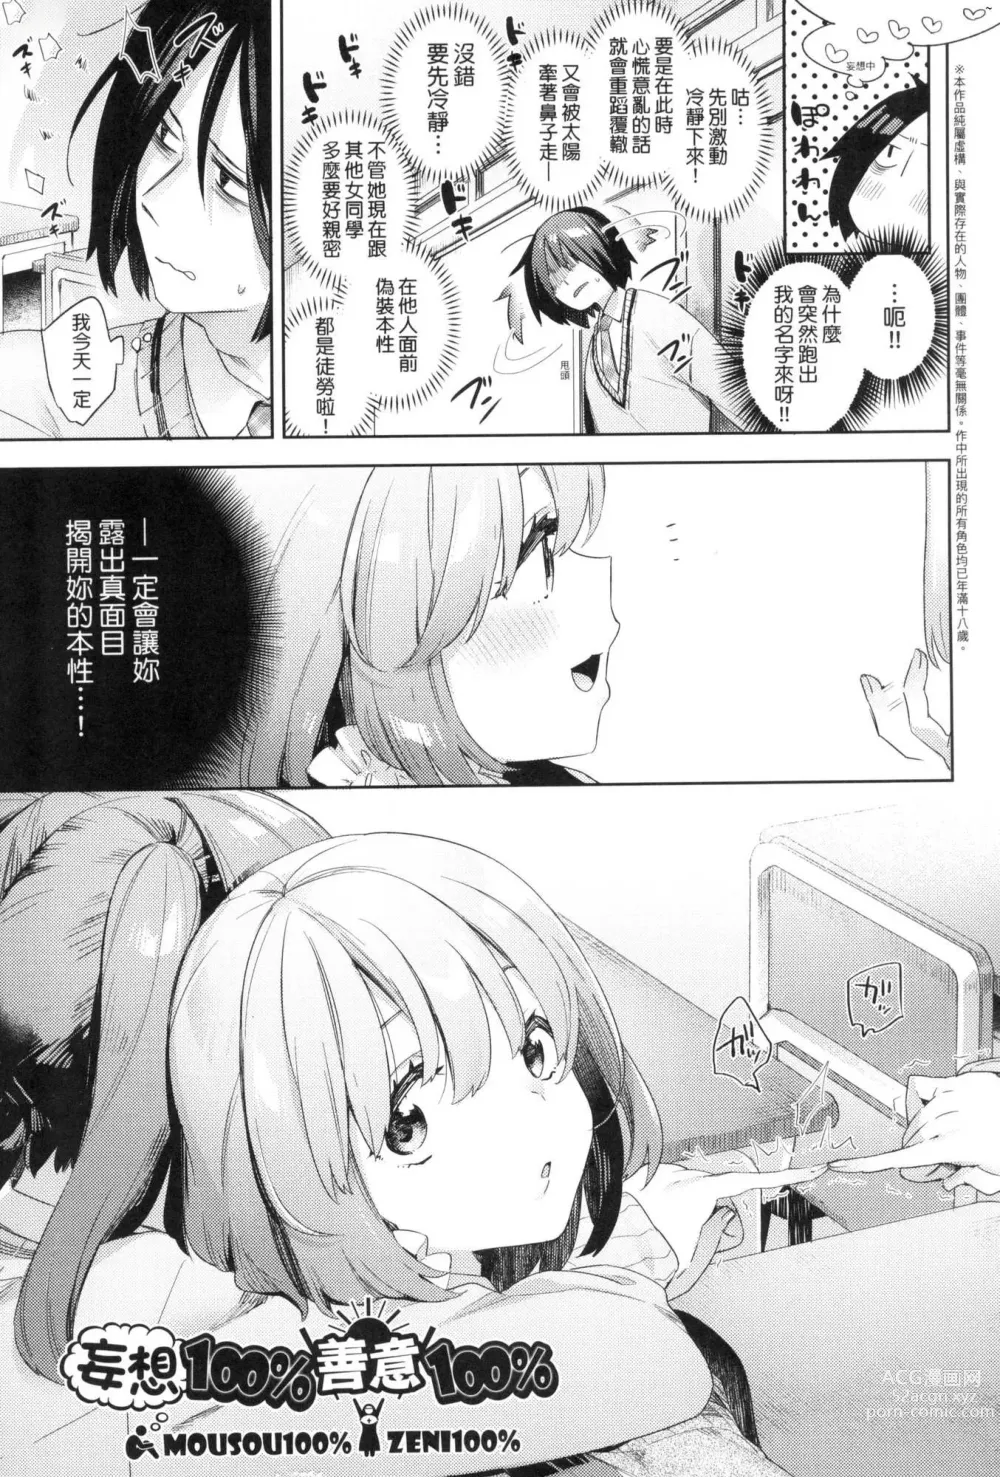 Page 9 of manga 好色女子祕蜜求愛紀錄 (decensored)